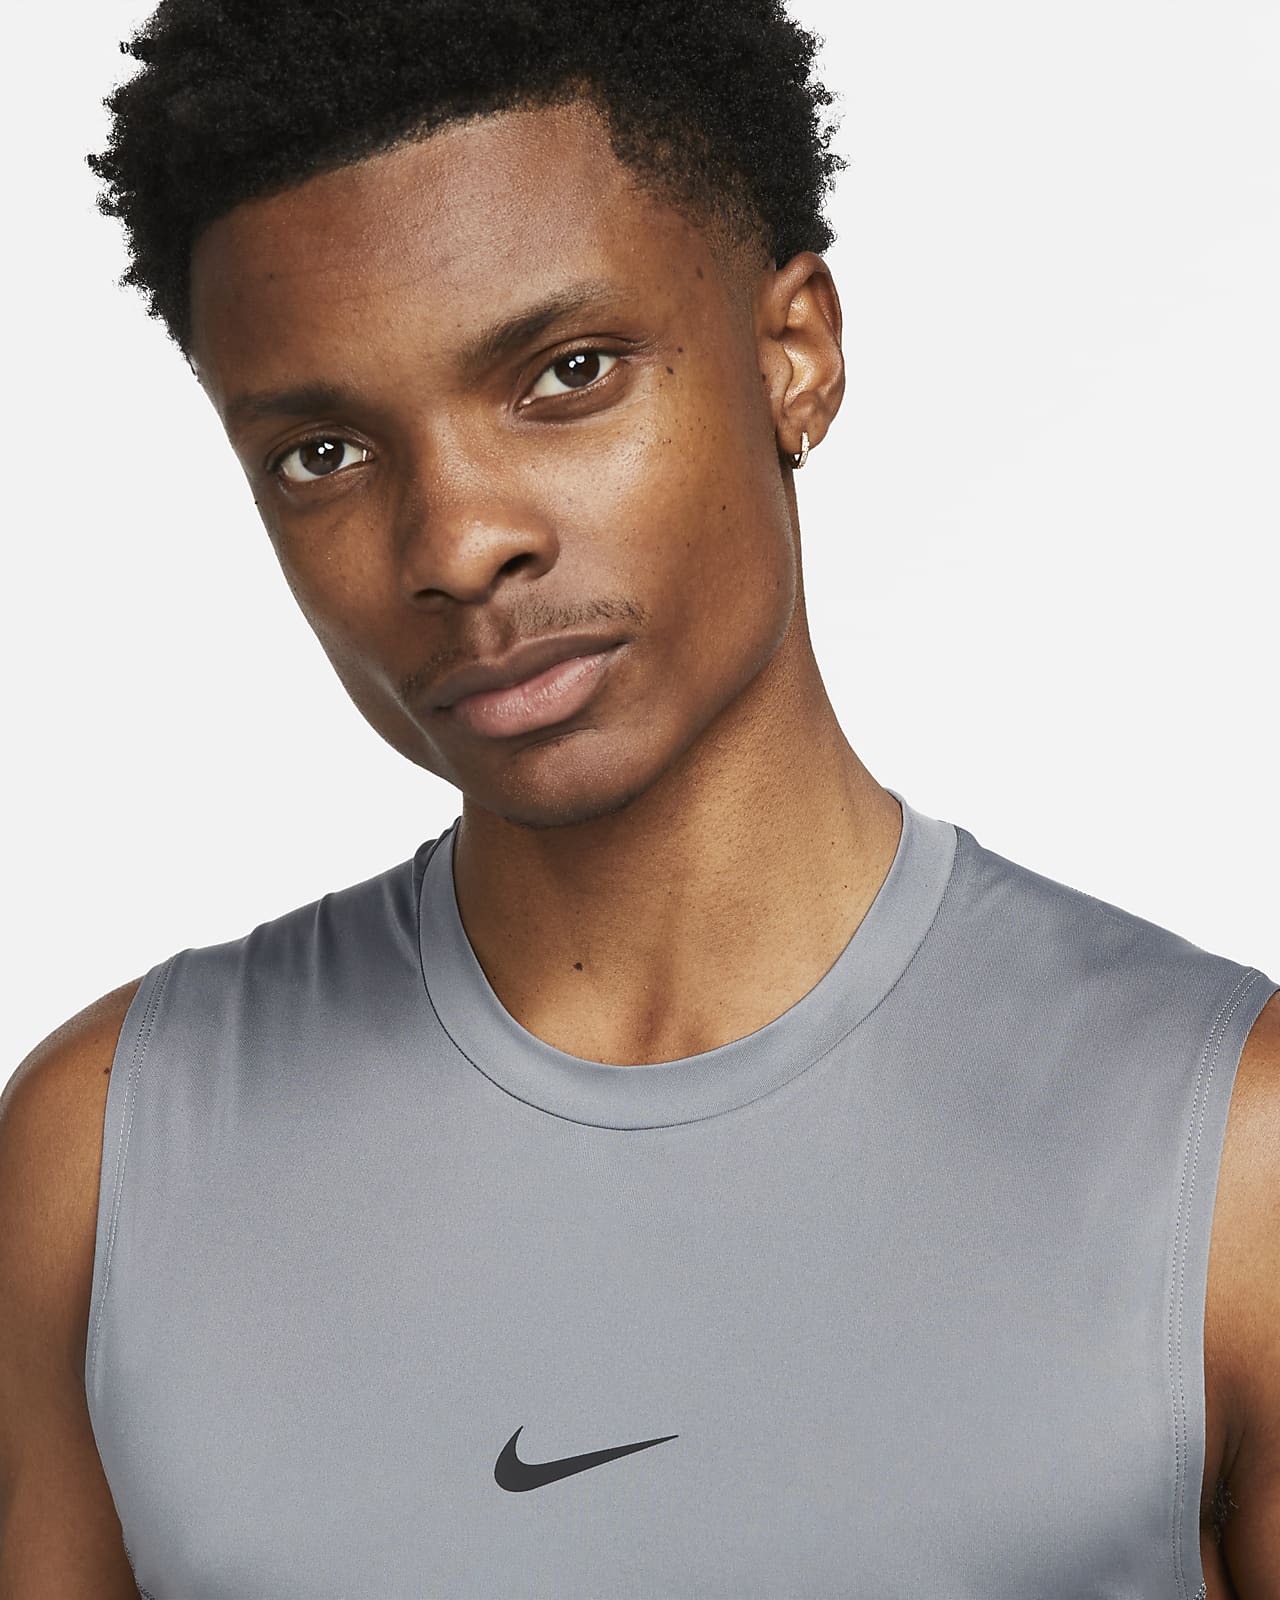 NEW!! Nike Pro Men's Dri-Fit Sleeveless Training Tank Top Shirts Variety  #205A